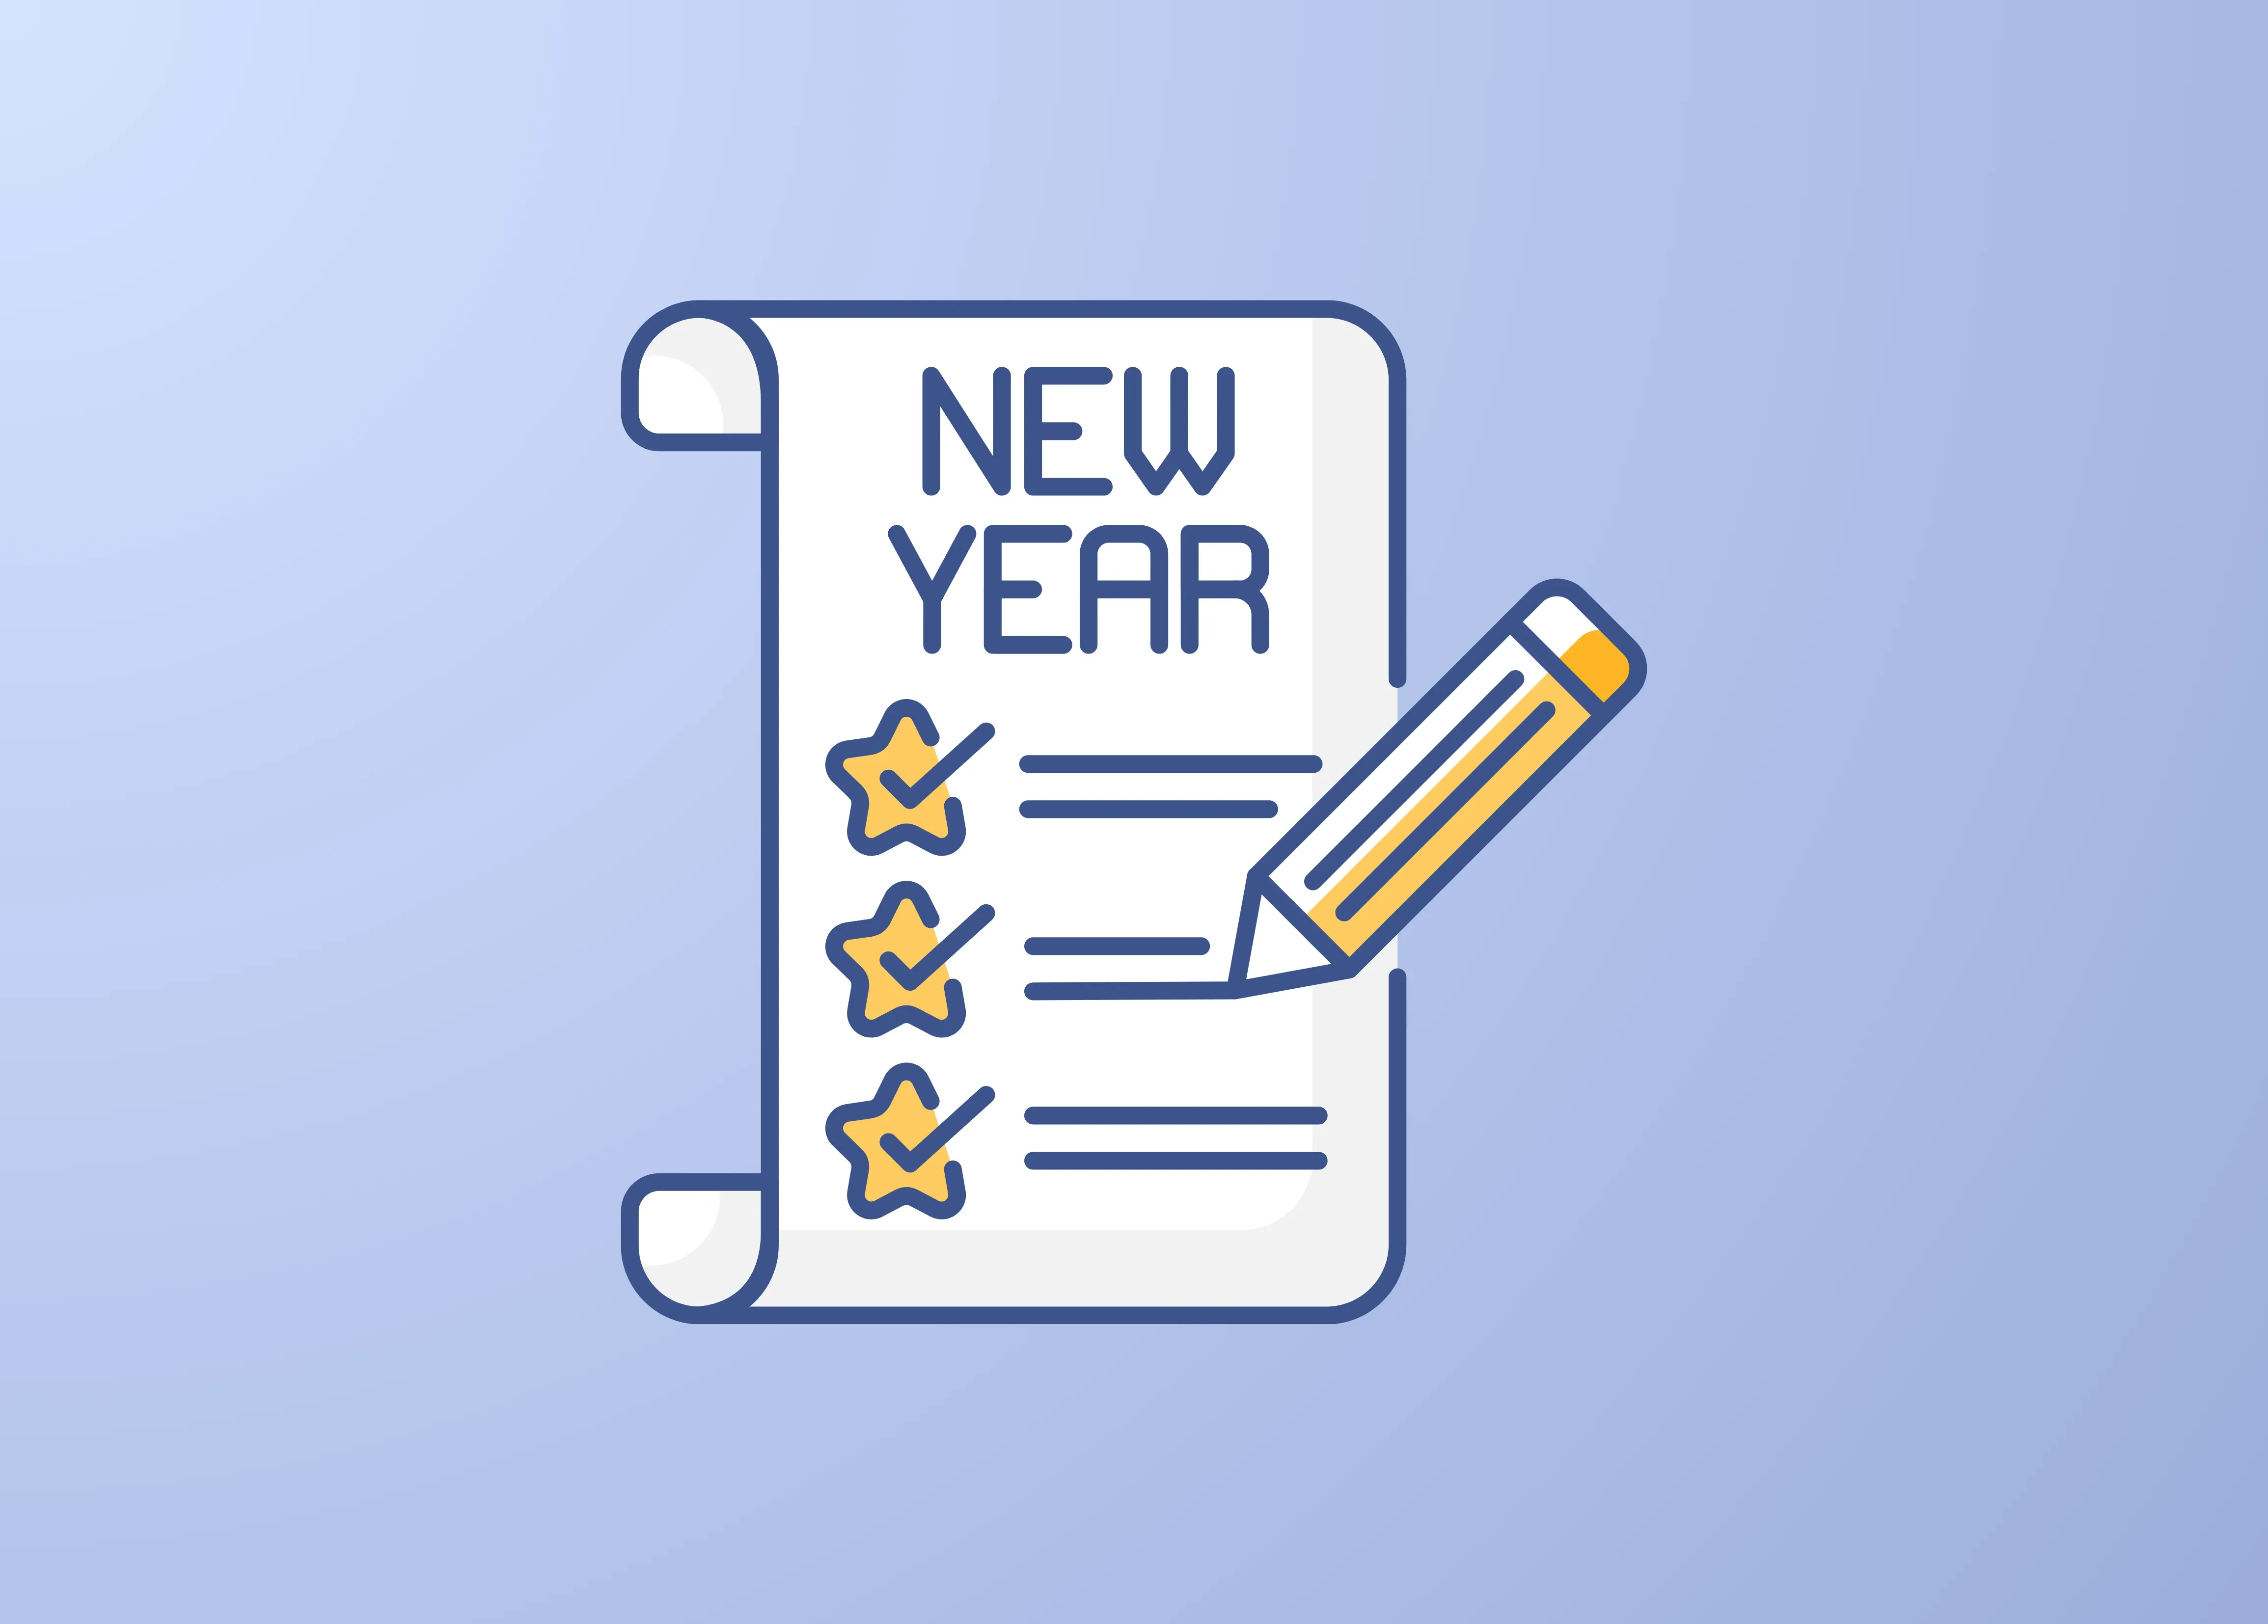 New Year Checklist on a purple background